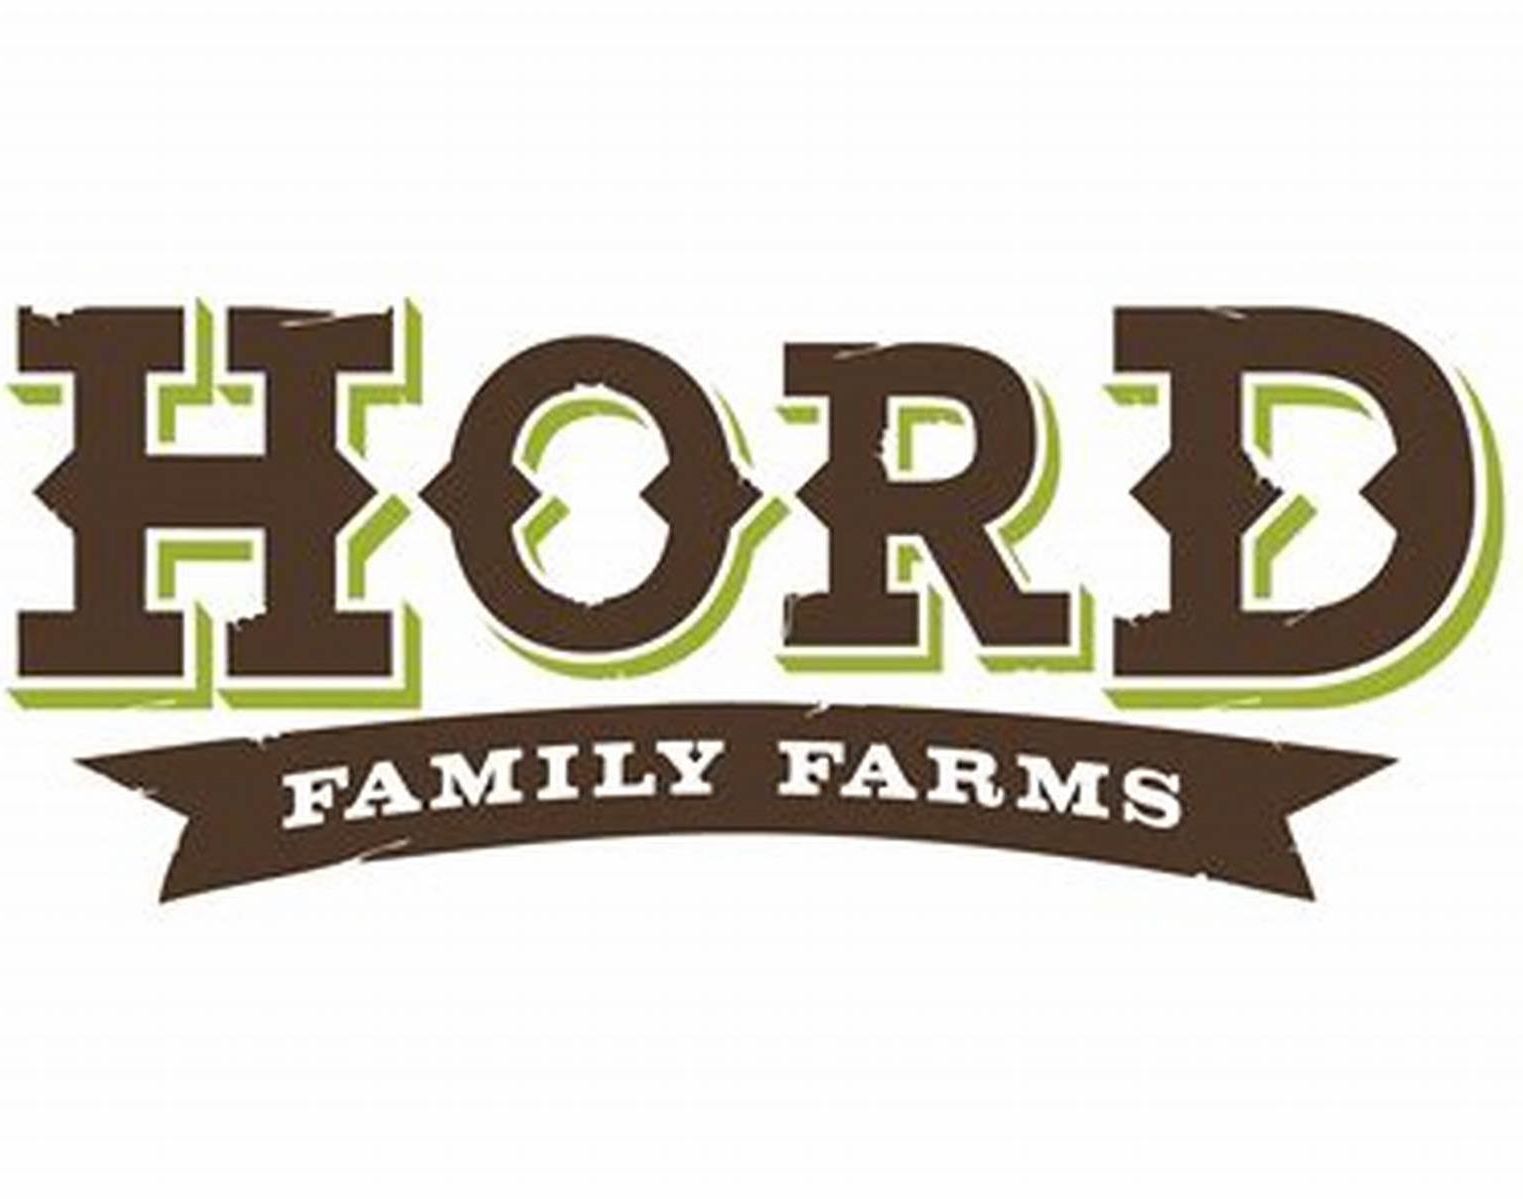 hord family farms